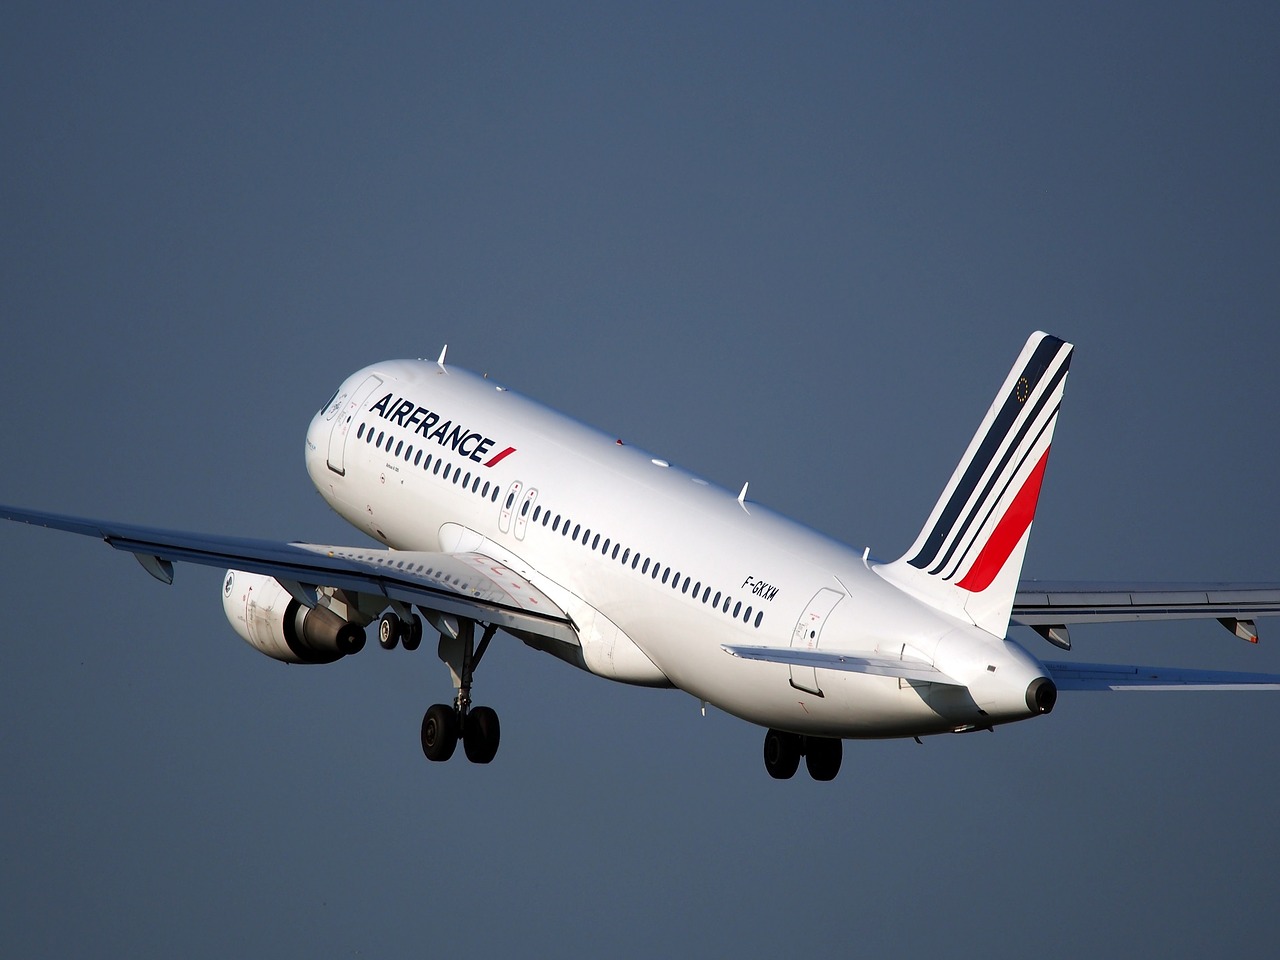 Les pilotes valident l’accord à Air France